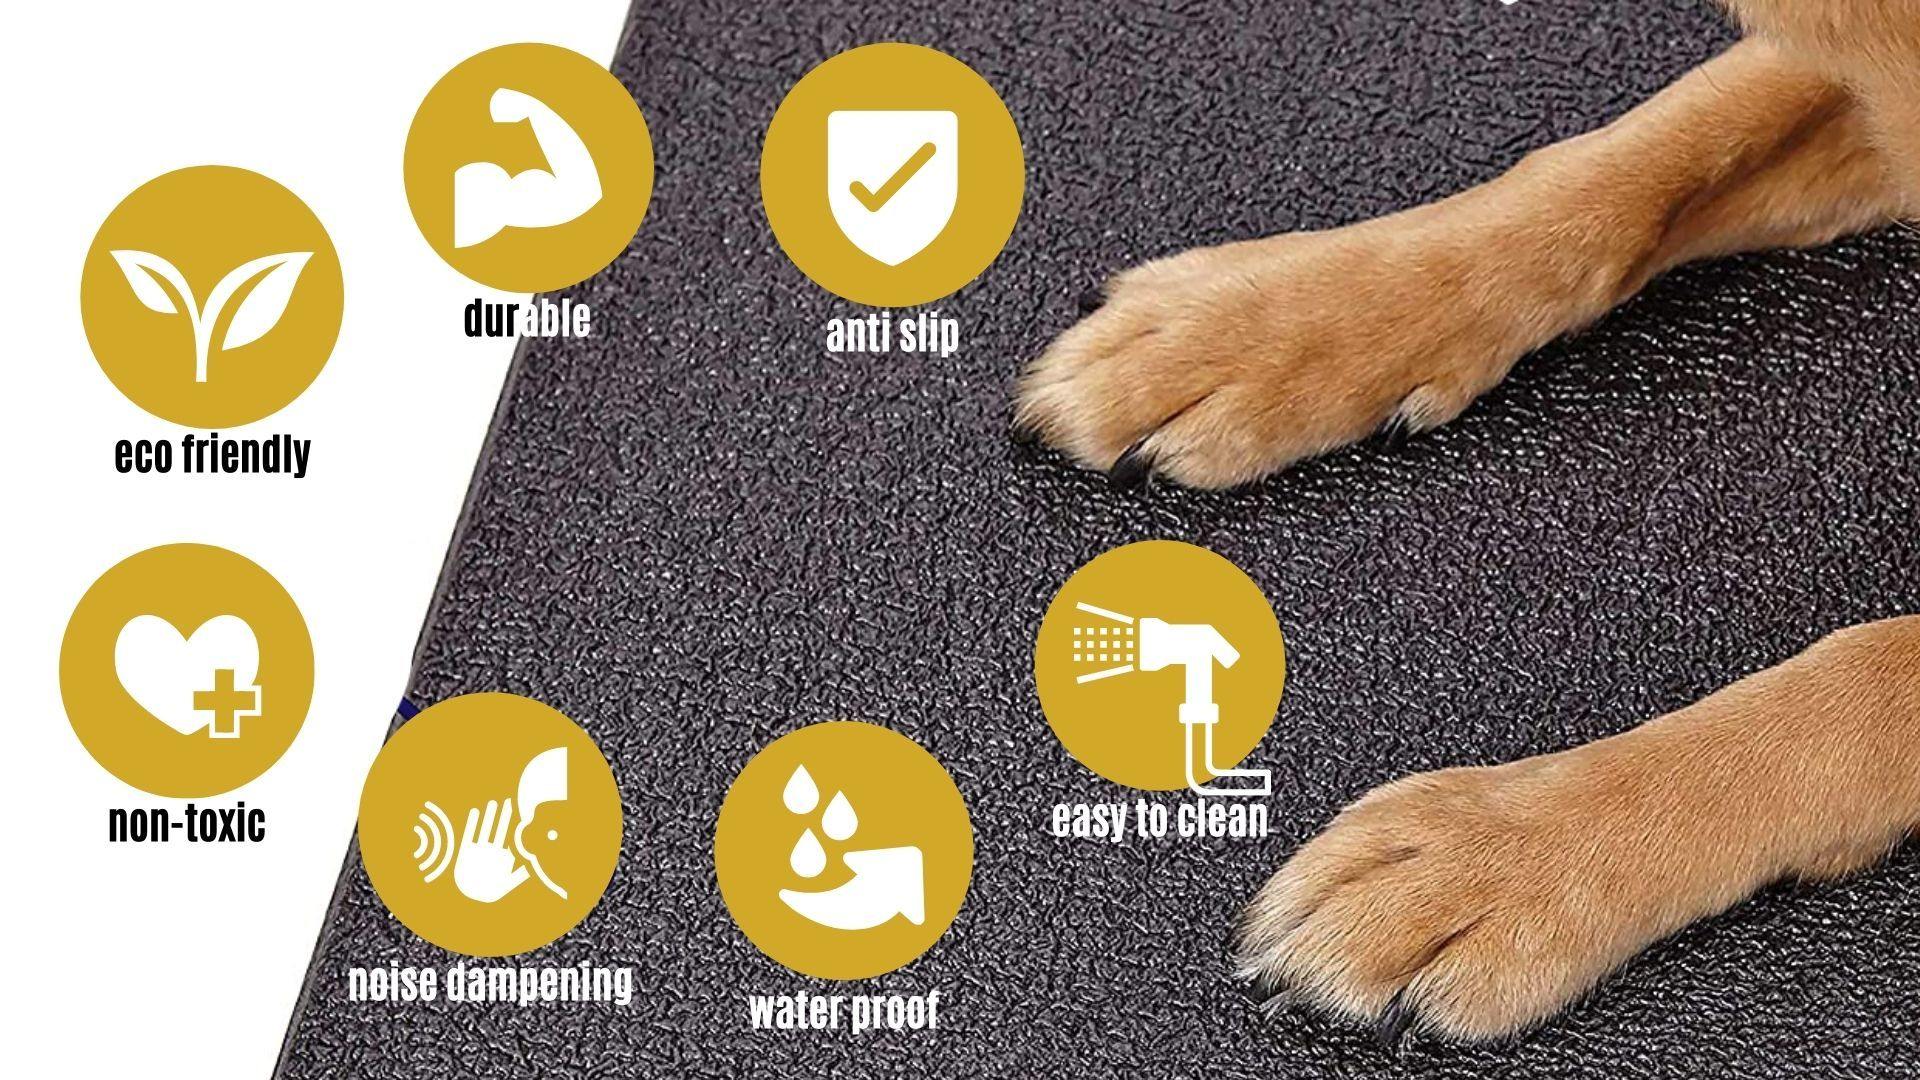  Pet Friendly Floor Protectors Mat, Anti-Skid